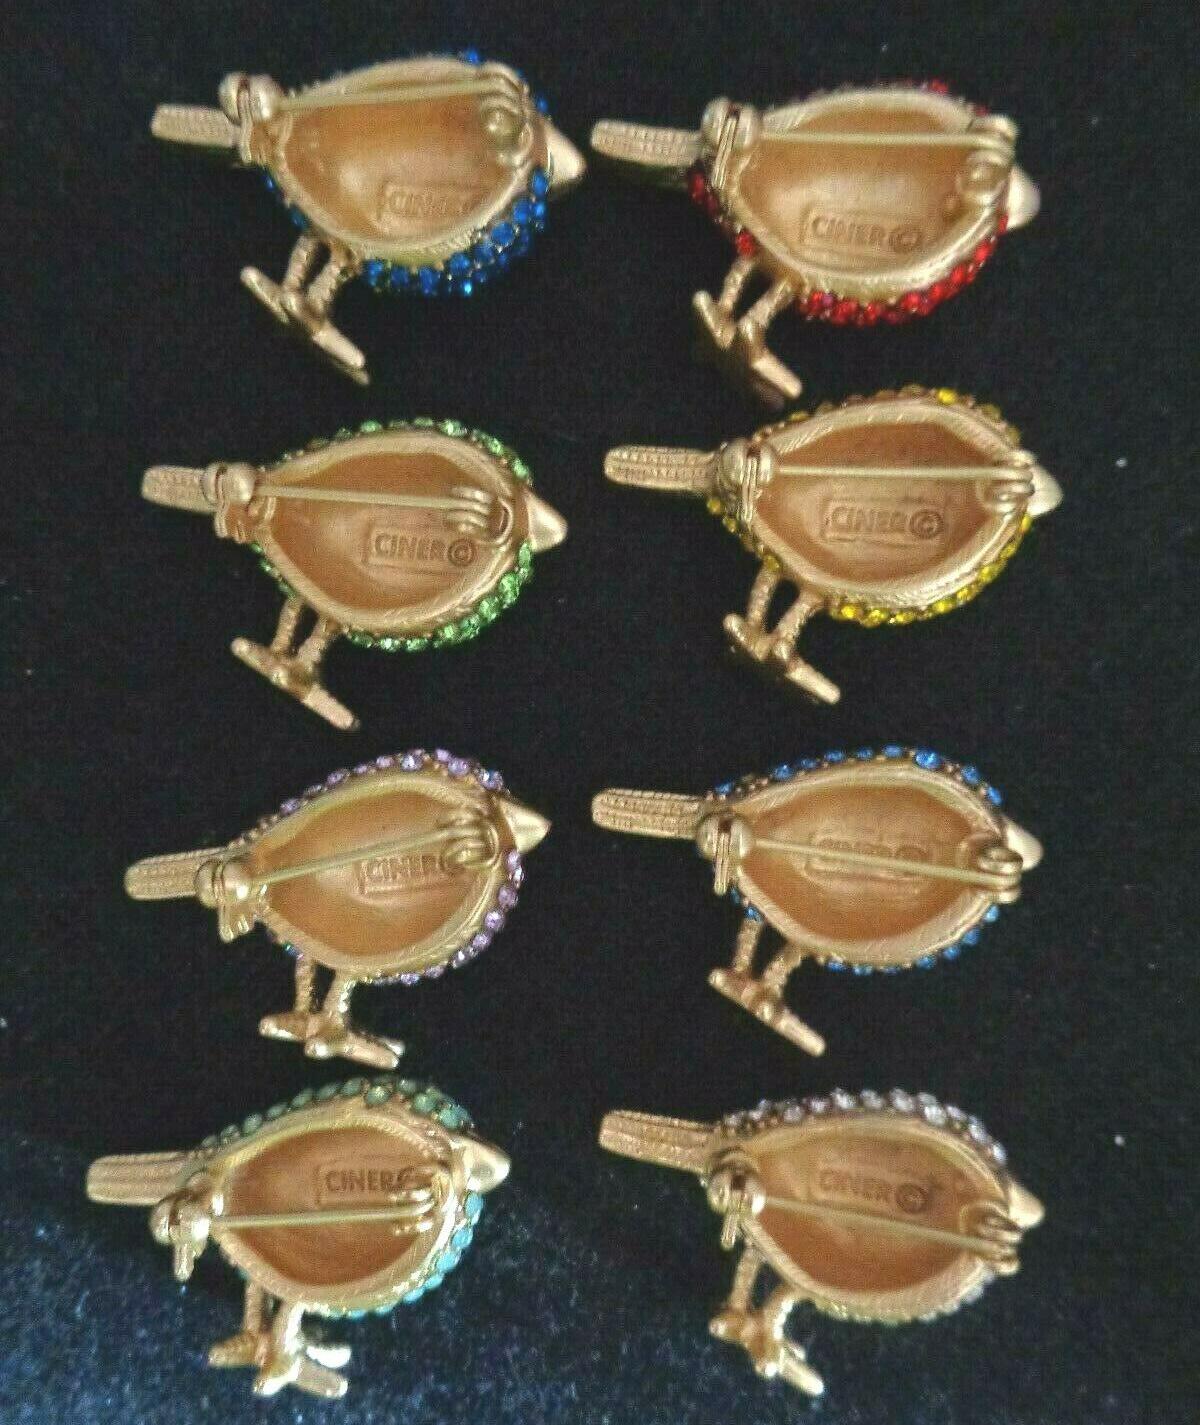 Women's or Men's Amazing CINER 8 Flock of Bird Pins Estate Collection Vintage Jewelry Brooch Pins